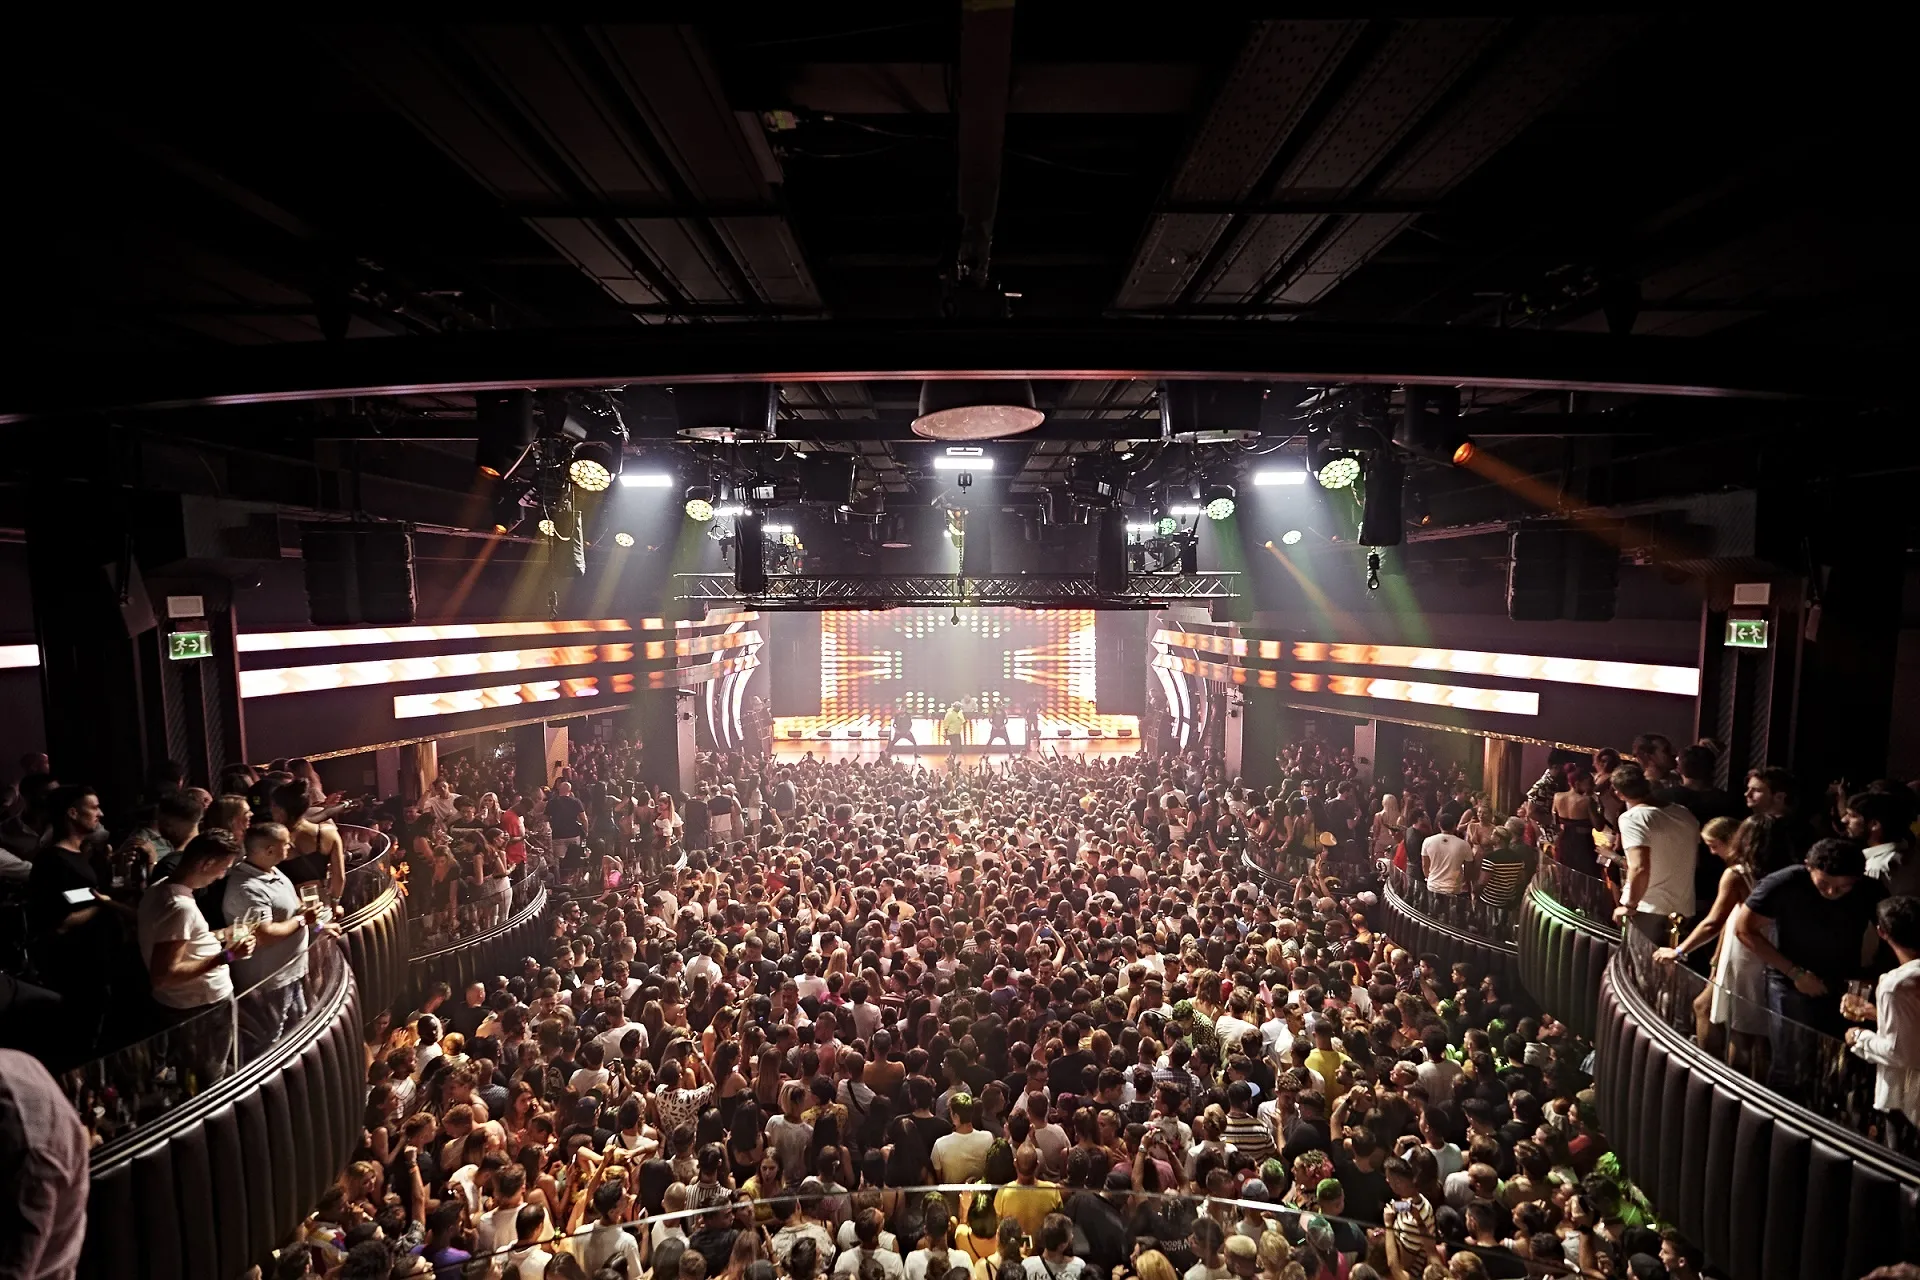 Hï Ibiza in Spain, Europe | Nightclubs - Rated 3.3